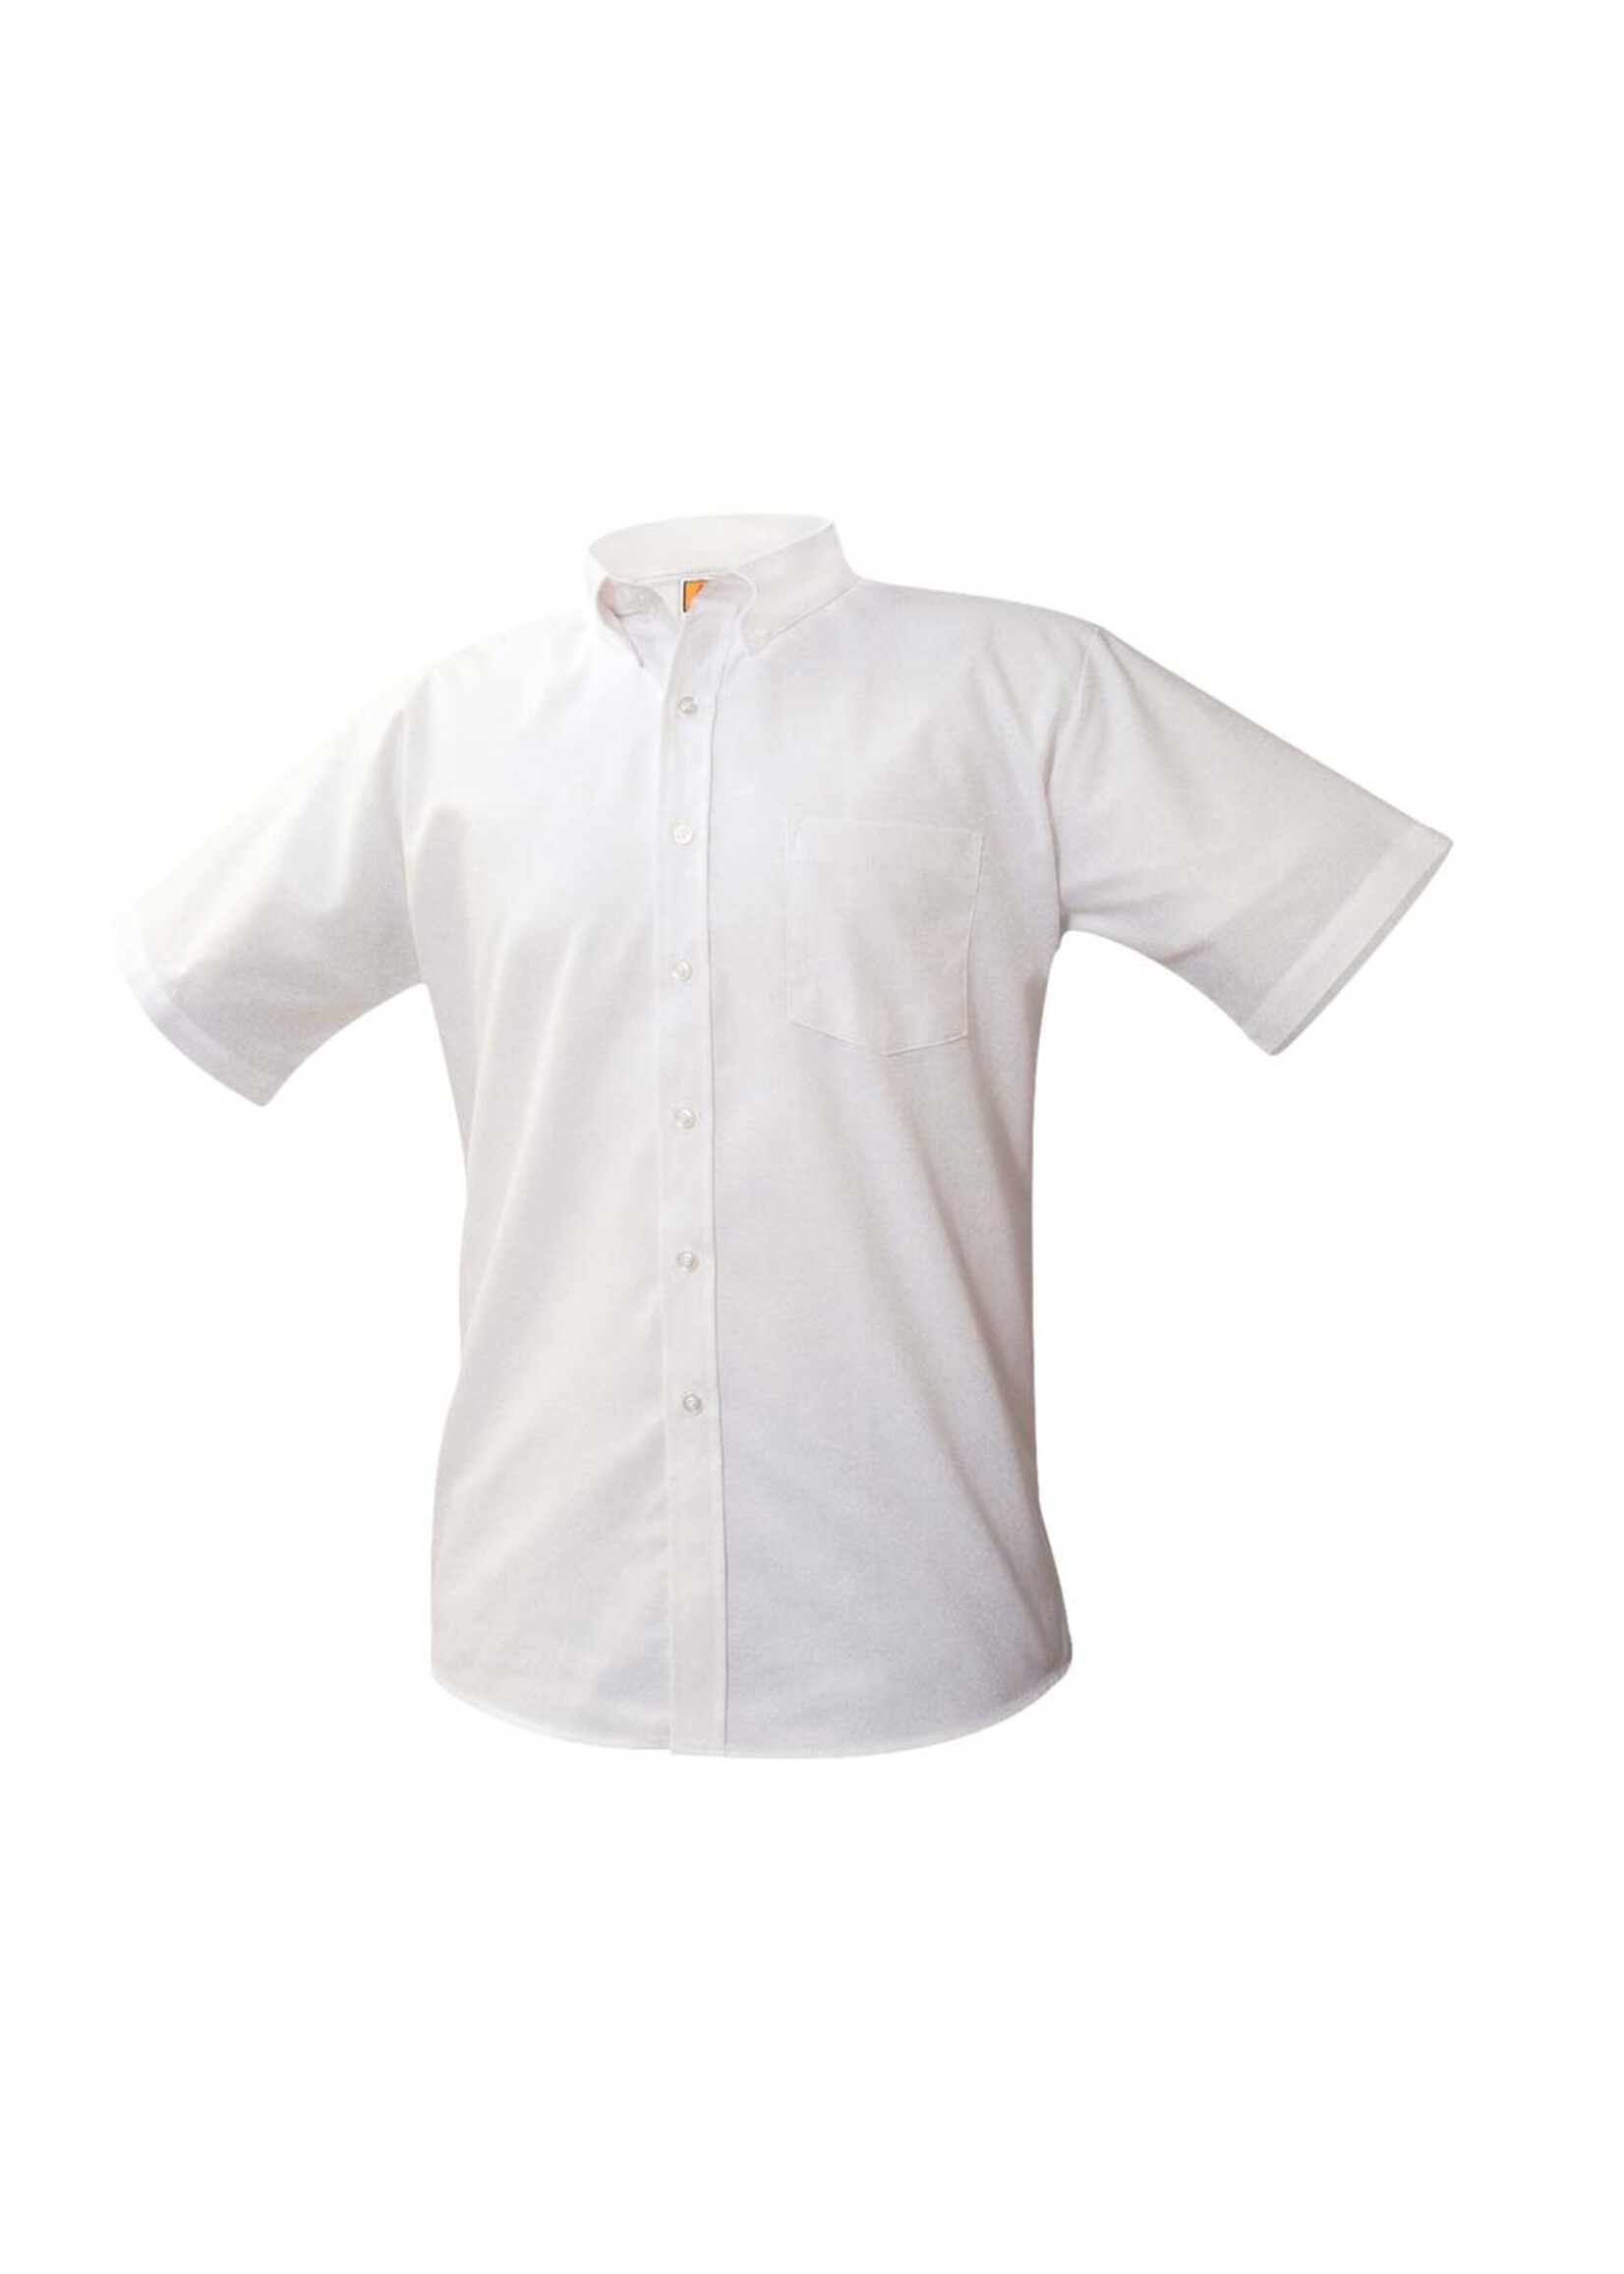 RLCS White Short Sleeve Oxford Shirt